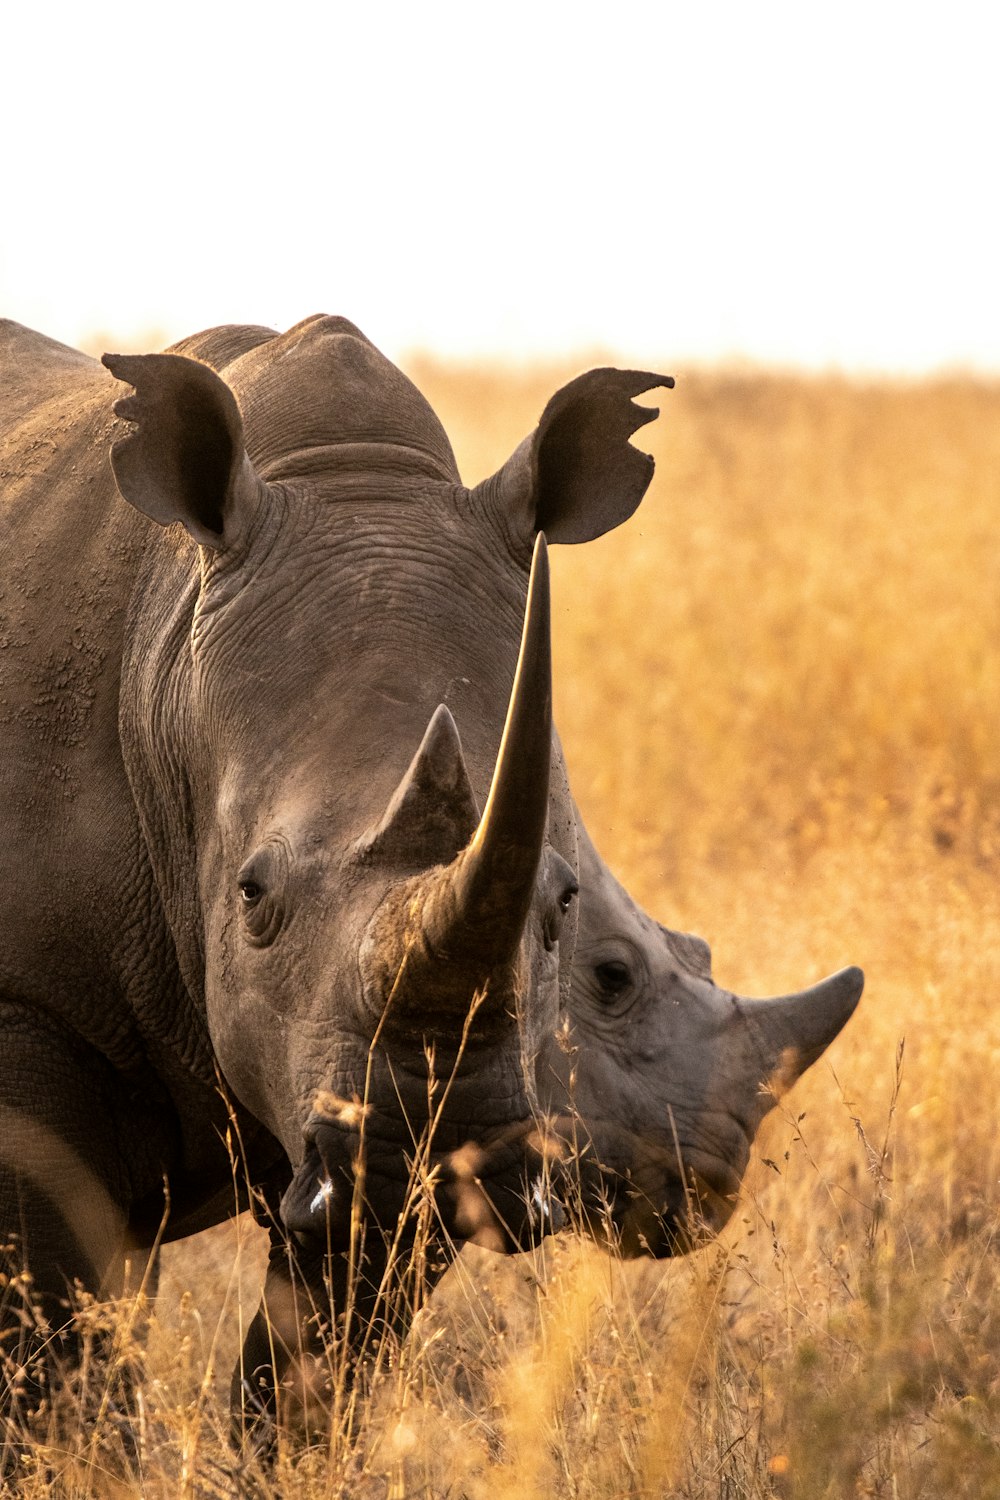 grey rhinoceros on brown grass field during daytime